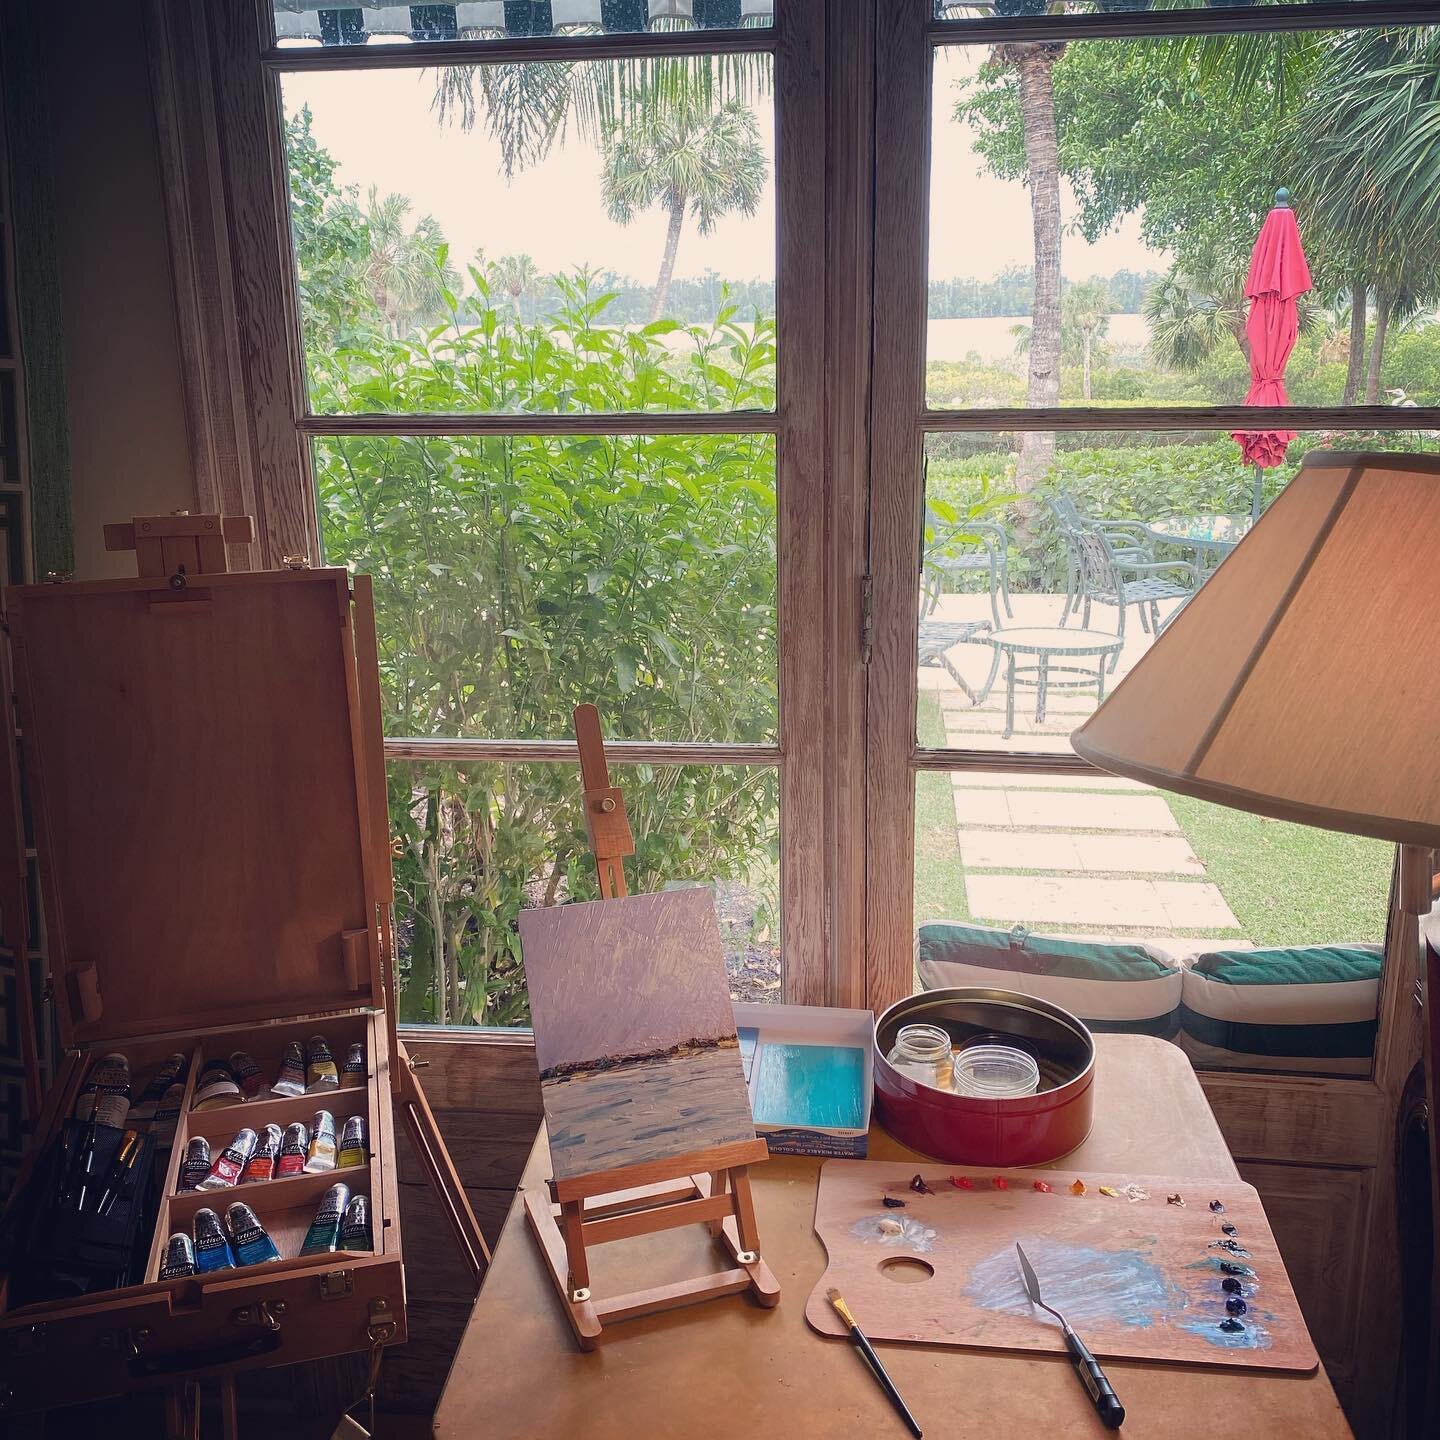 My quarantine studio is not so bad 😷🎨🌴☀️#sagegoldsmithpaintings #studio #oilpainting #canvas #ontheeasel #landscapepainting #inlet #water #trees #palmtrees #sunshine #florida #umbrella #paint #create #quarantine #staysafe #stayhome